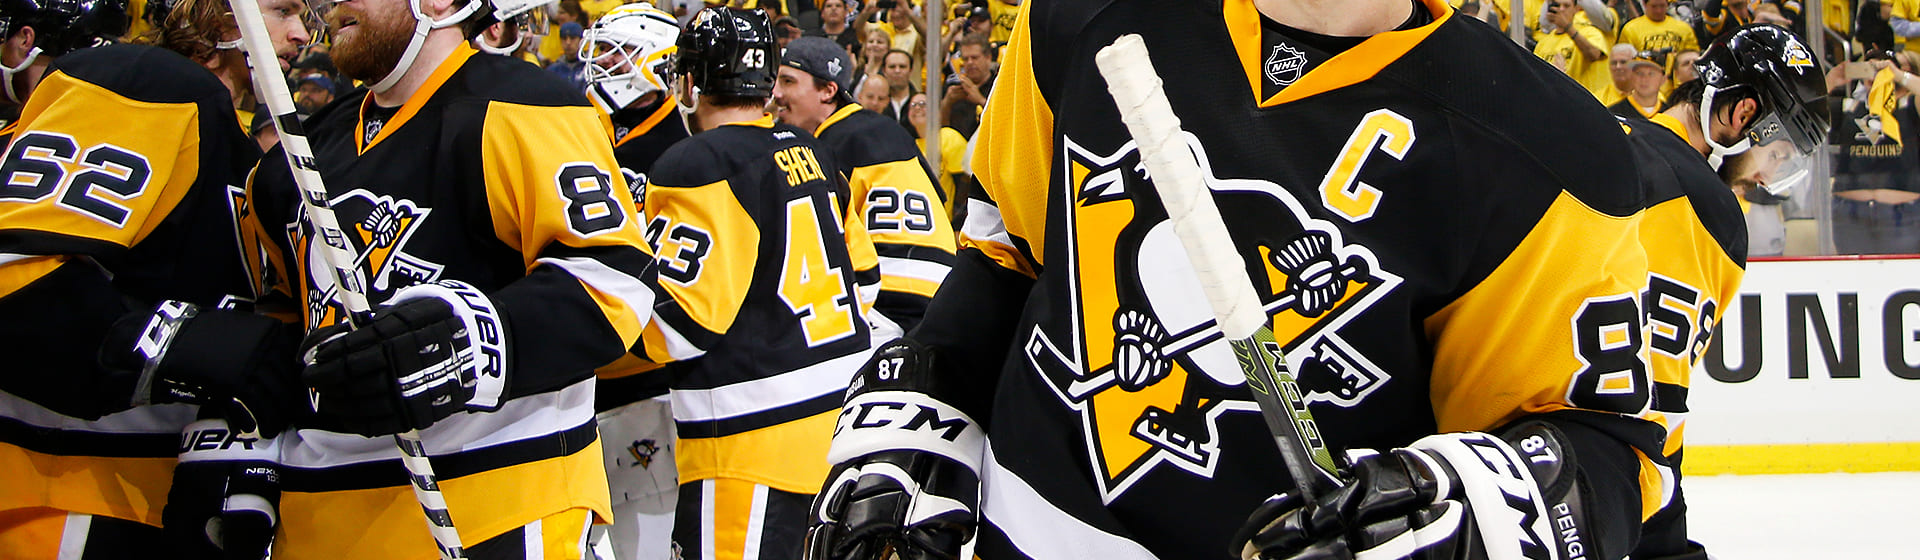 Pittsburgh Penguins - Мерч и одежда с атрибутикой